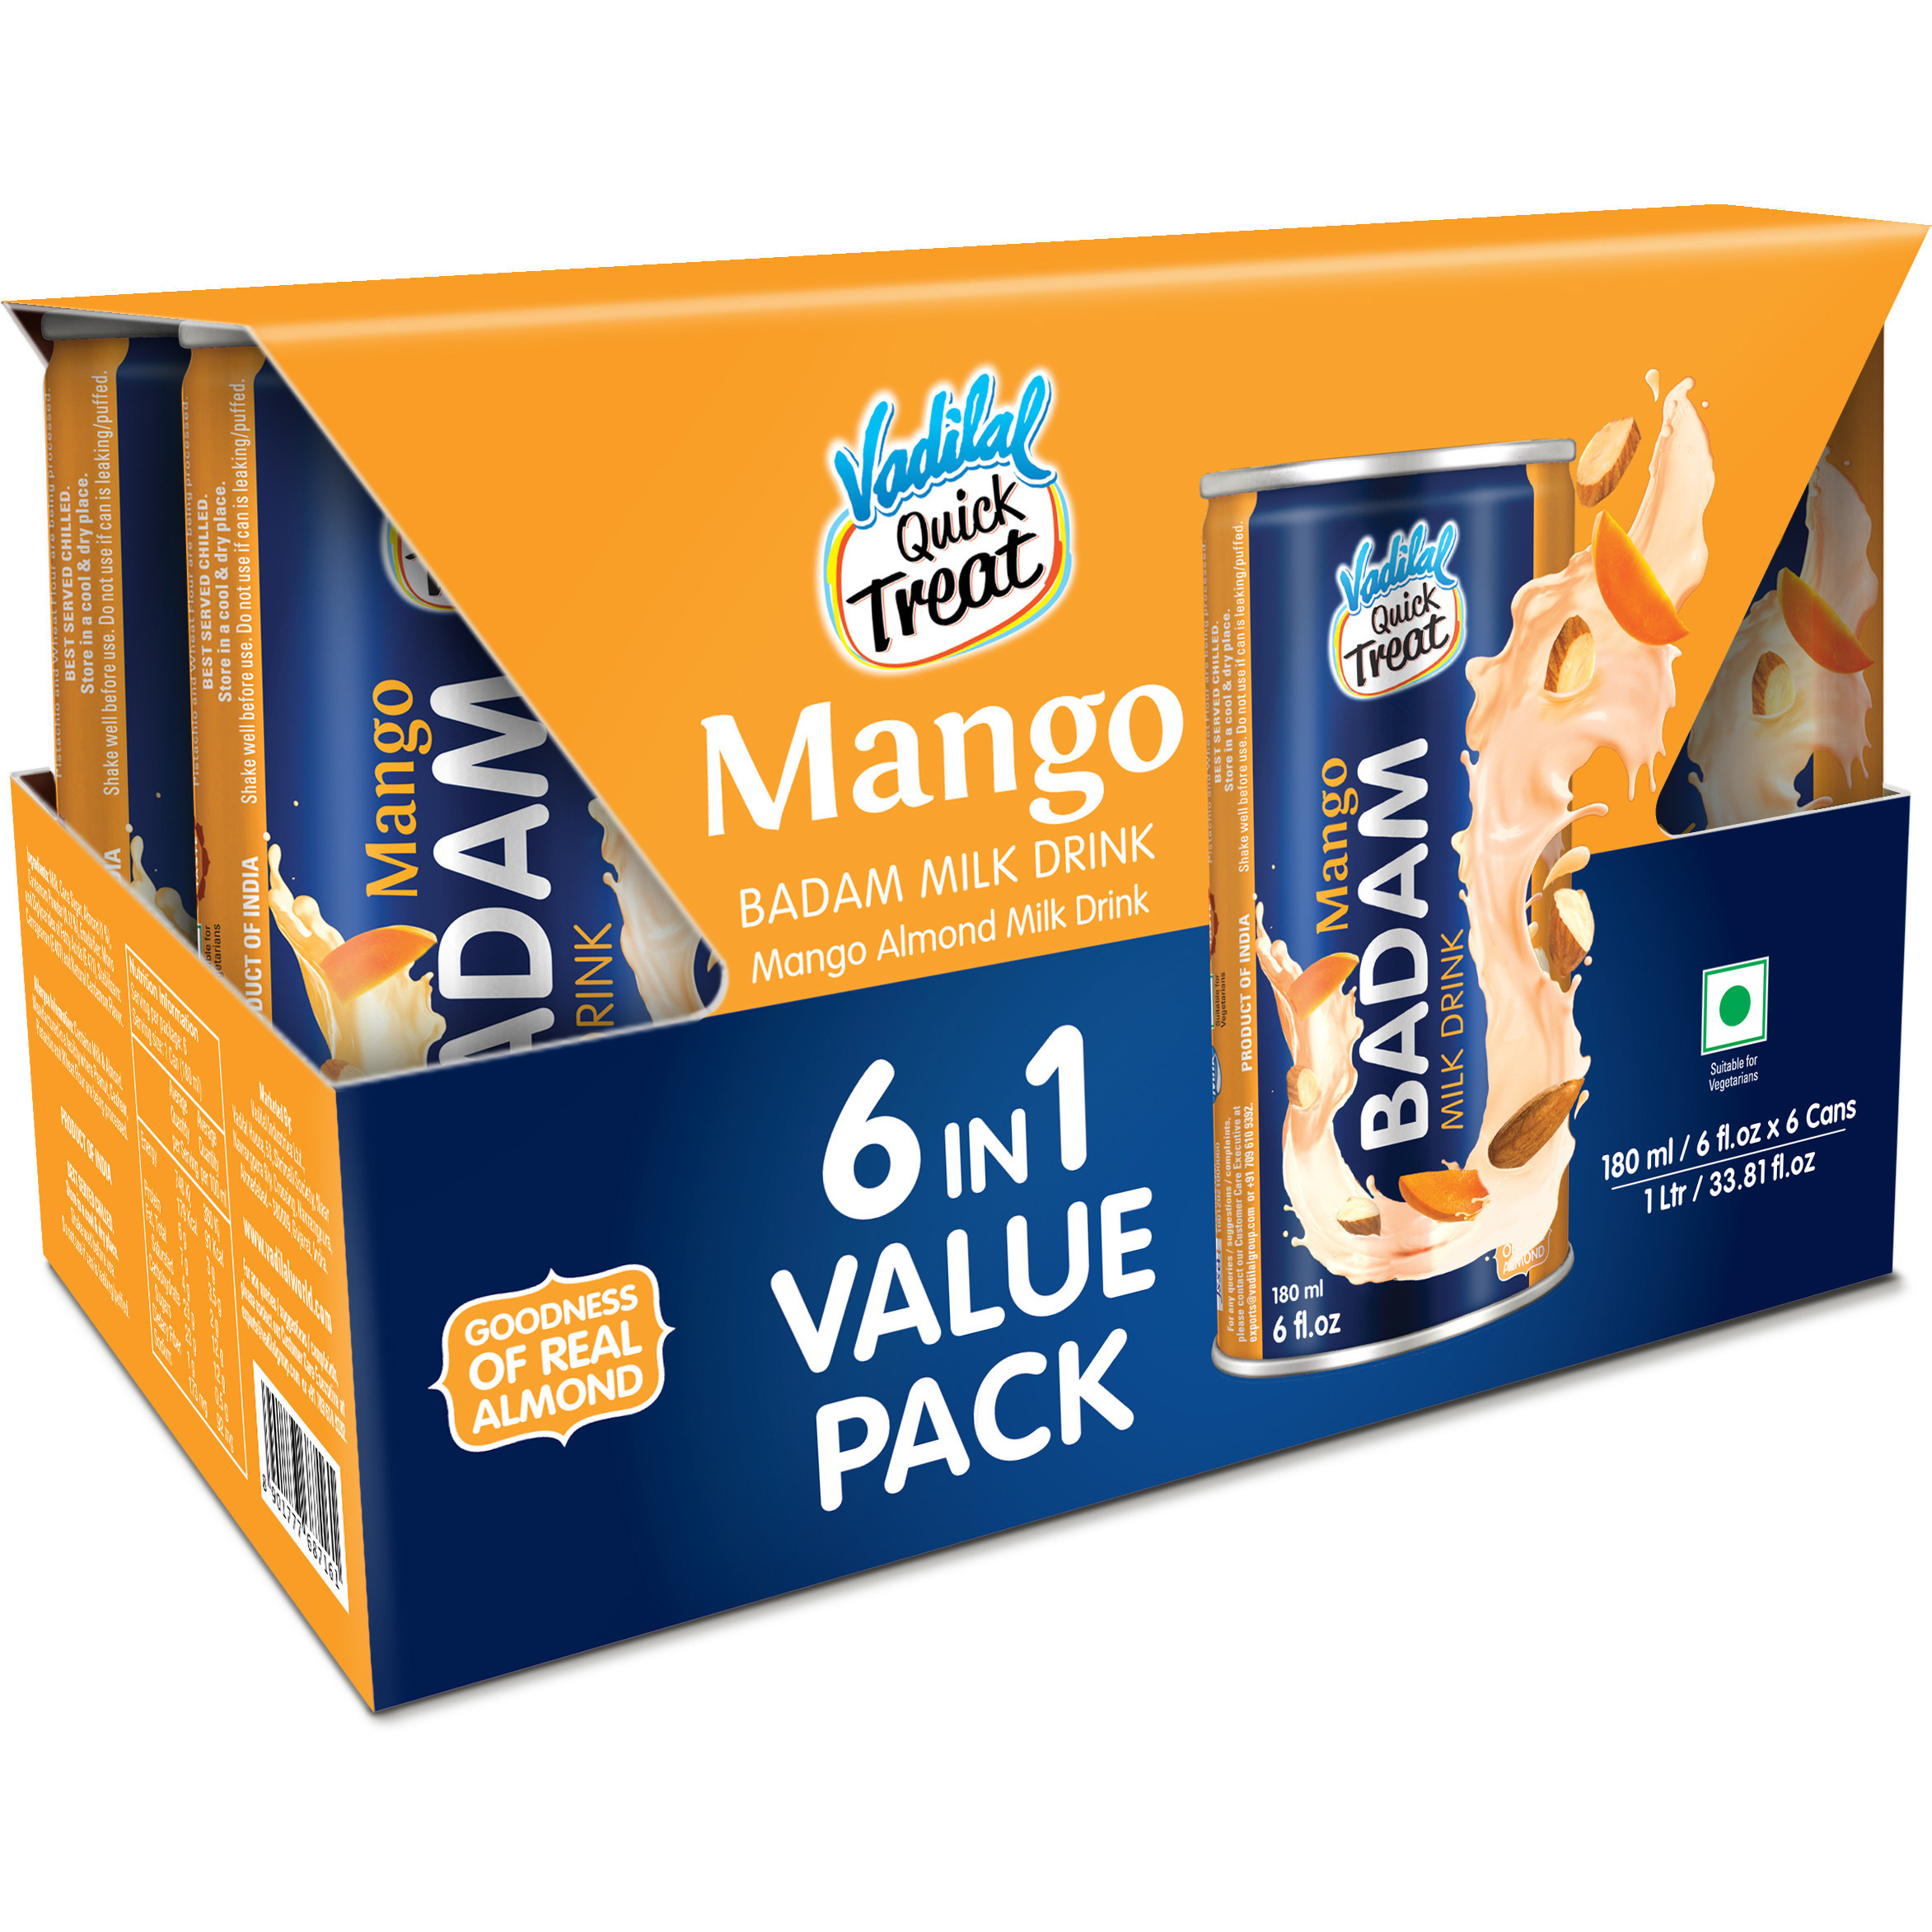 Pack of 3 - Vadilal Mango Badam Milk 6 In 1 Value Pack - 180 Ml (6 Fl Oz)